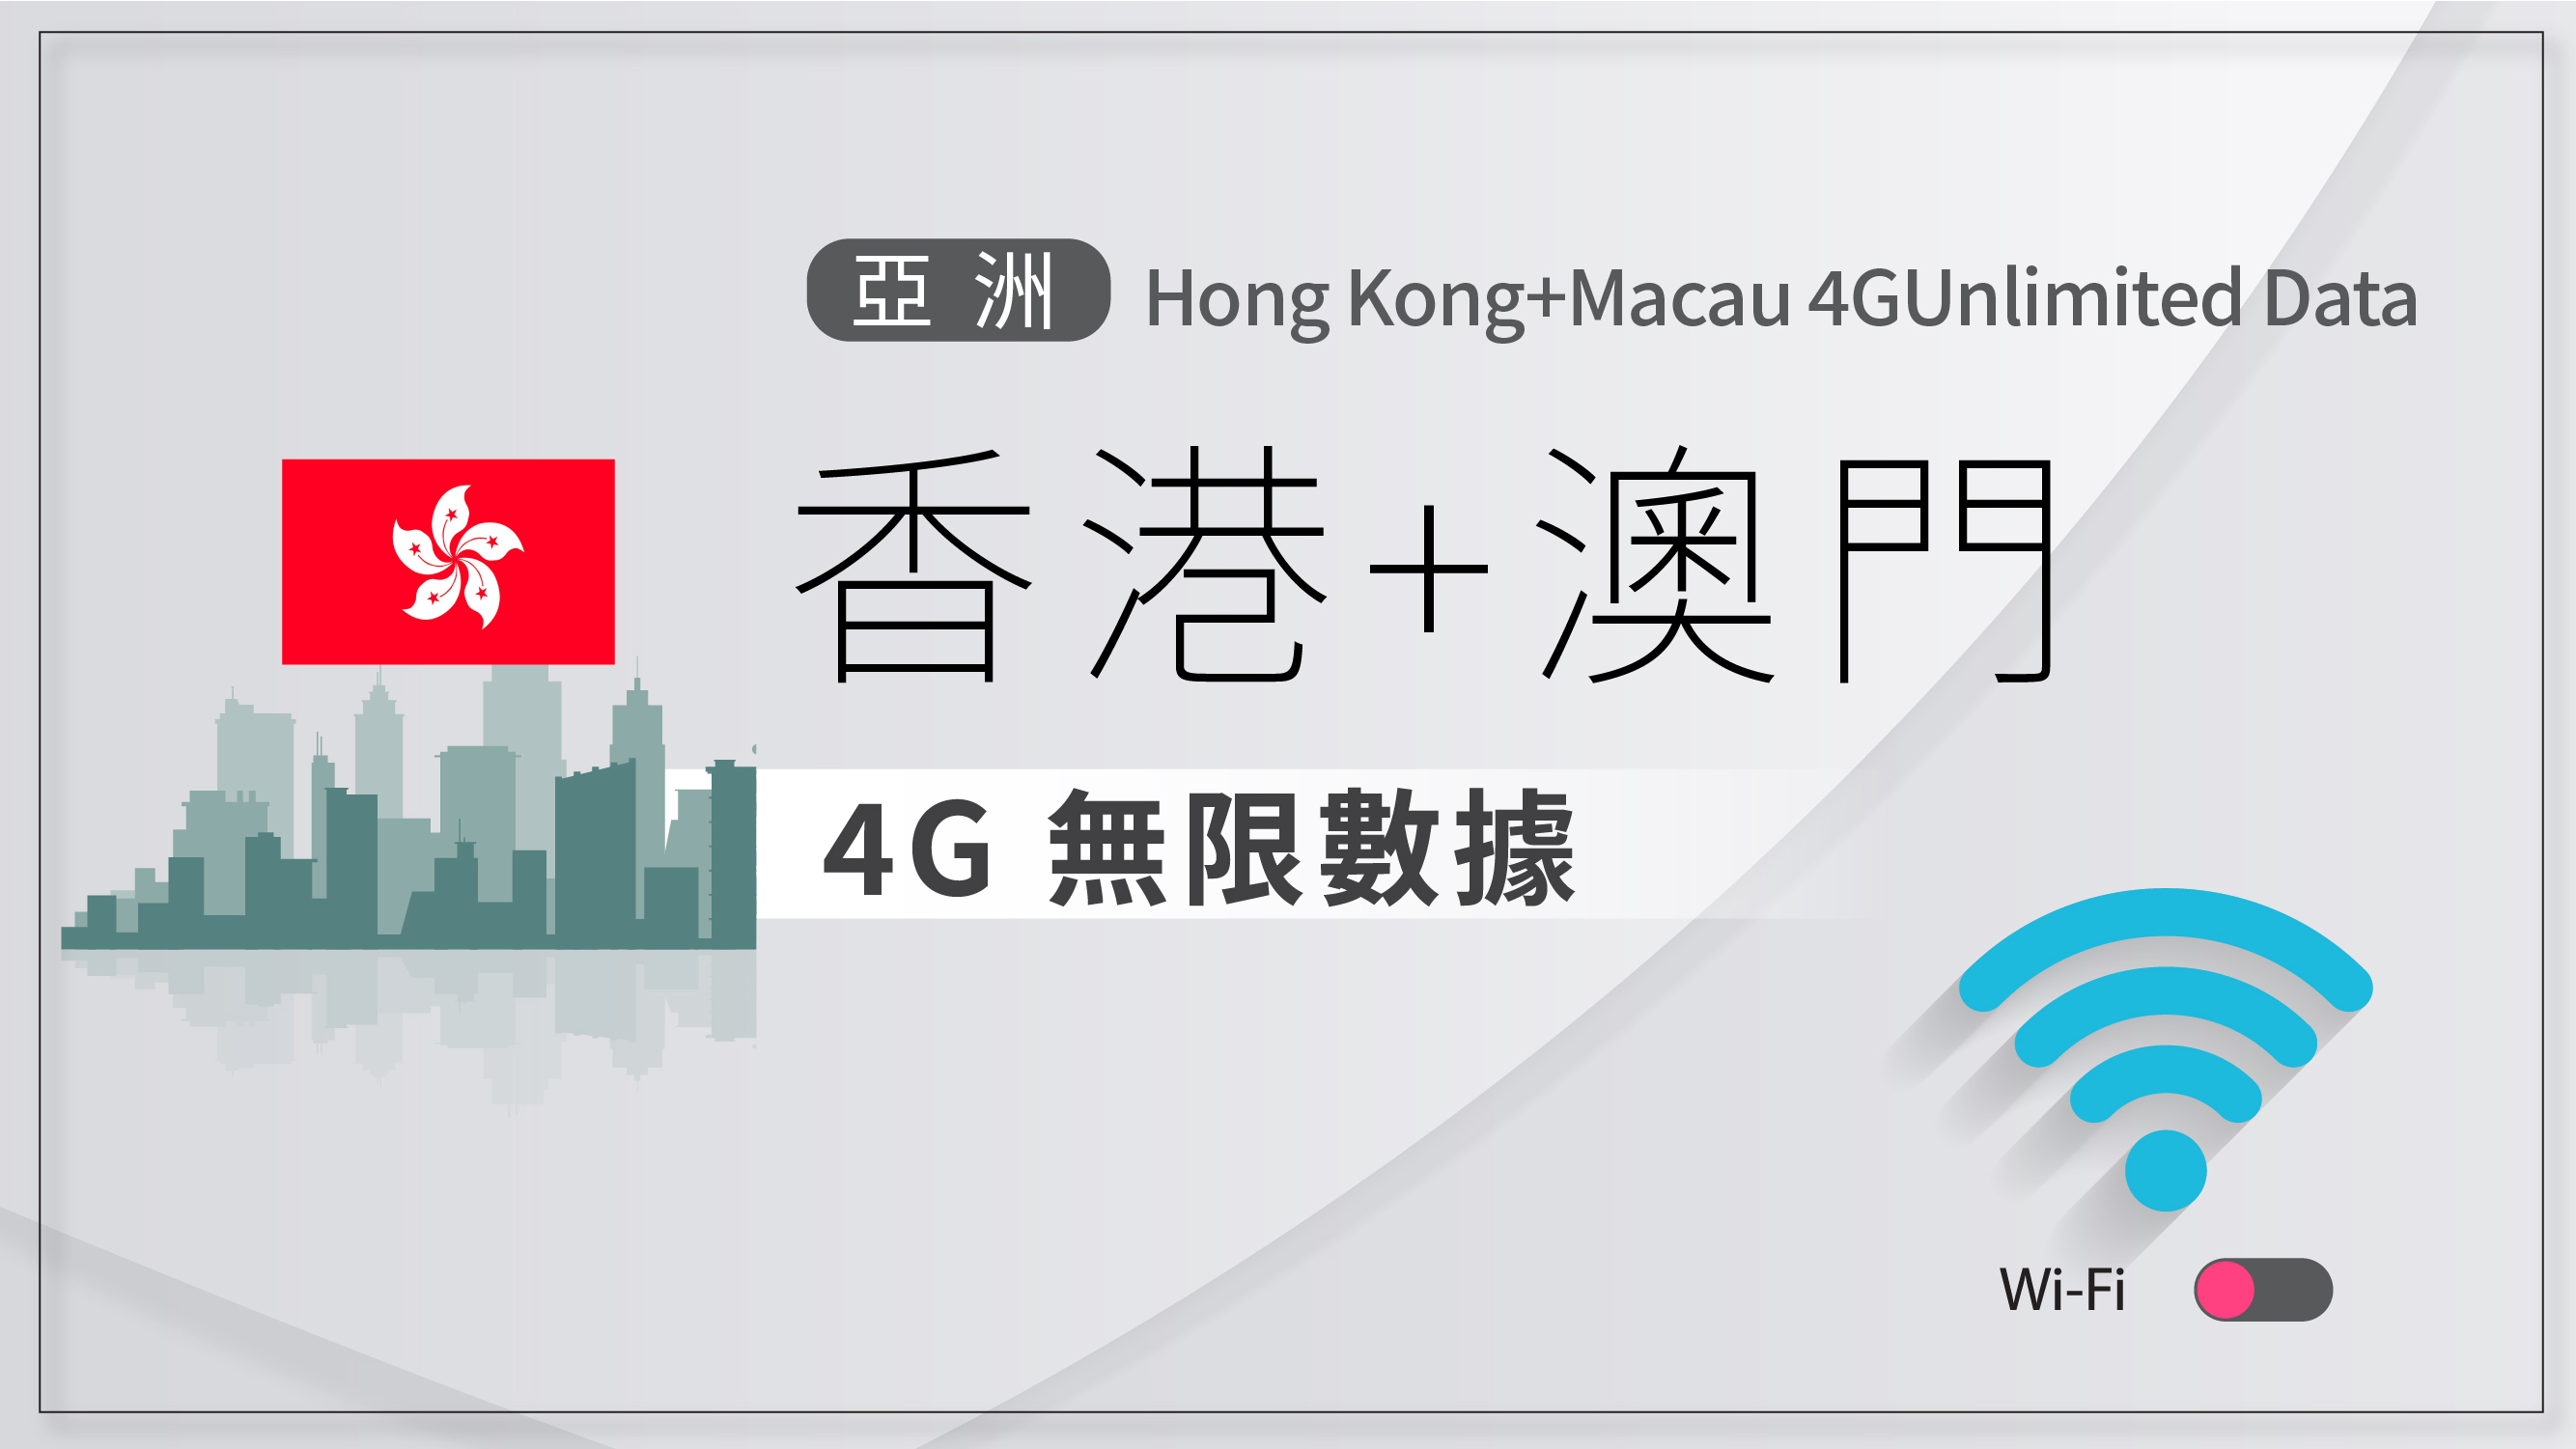 NEXT WIFI_Hong Kong. Macau 4G unlimited data